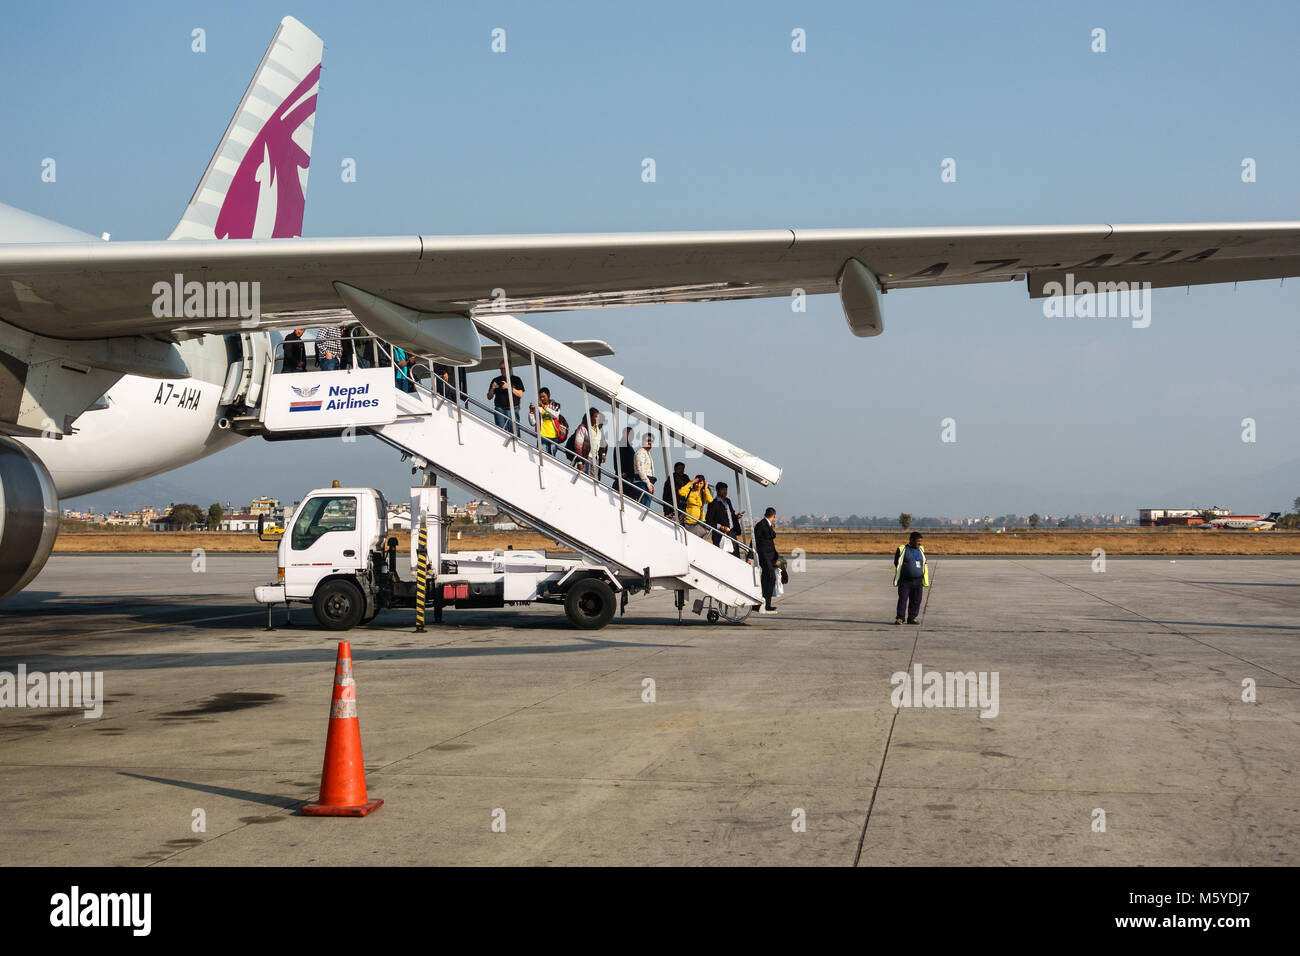 KATHMANDU, NEPAL - CIRCA JANUARY 2018: Passengers disembarking from a Qatar Airways flight at Tribhuvan International Airport. Stock Photo